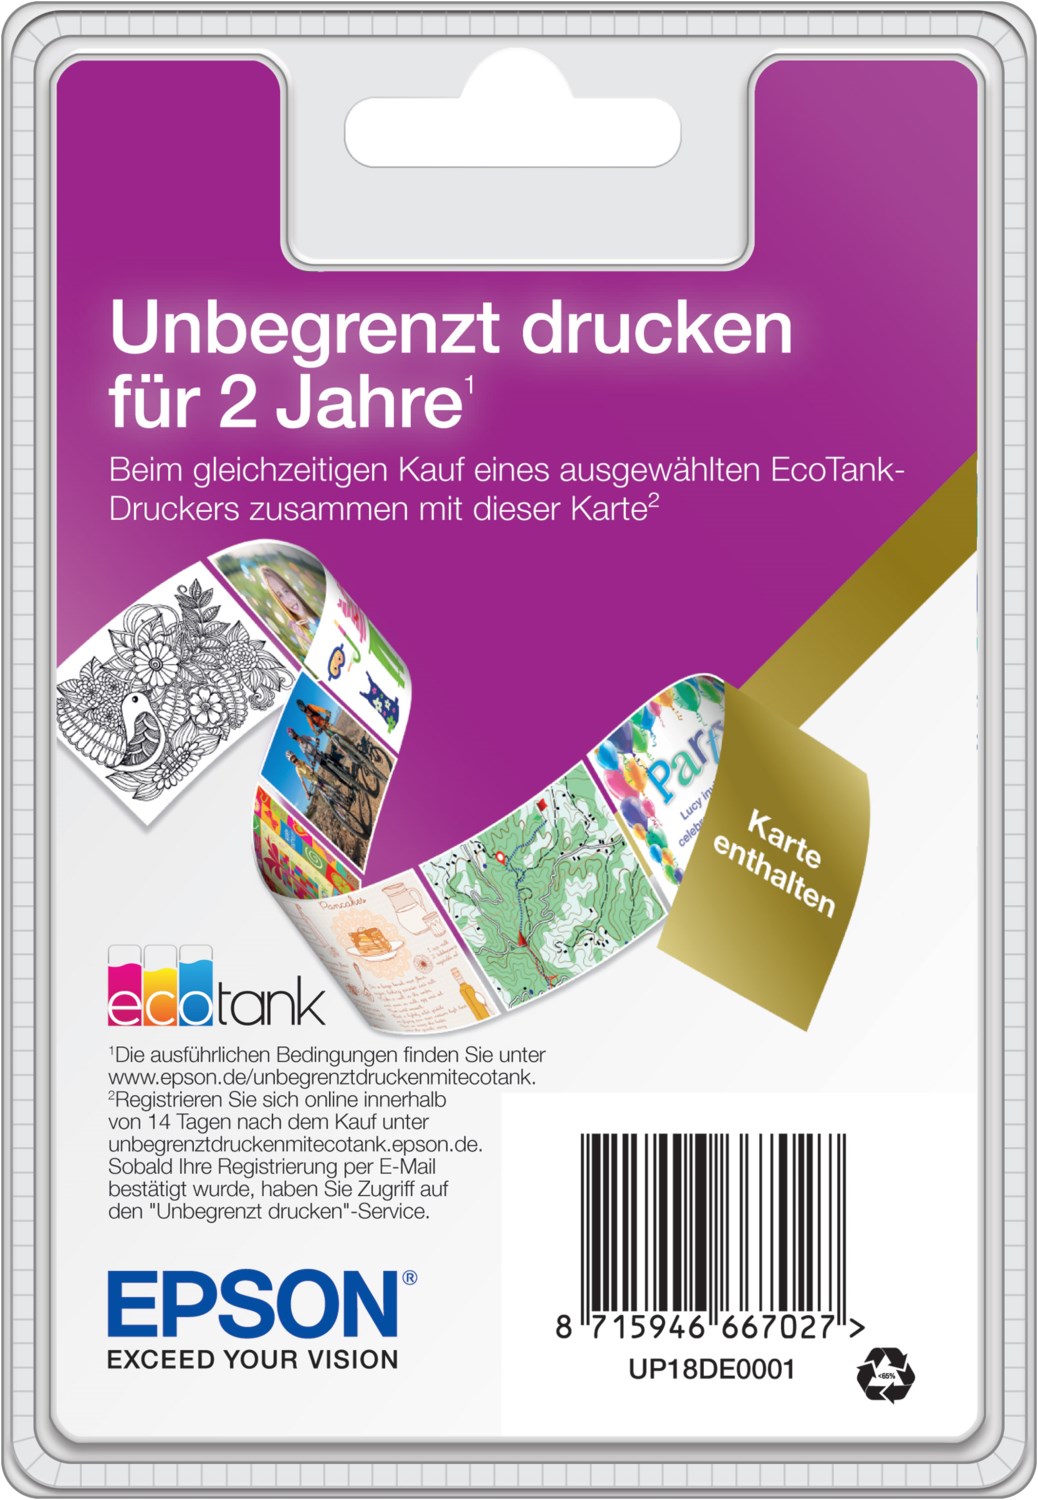 EcoTank Unlimited Printing Karte (2 Jahre)